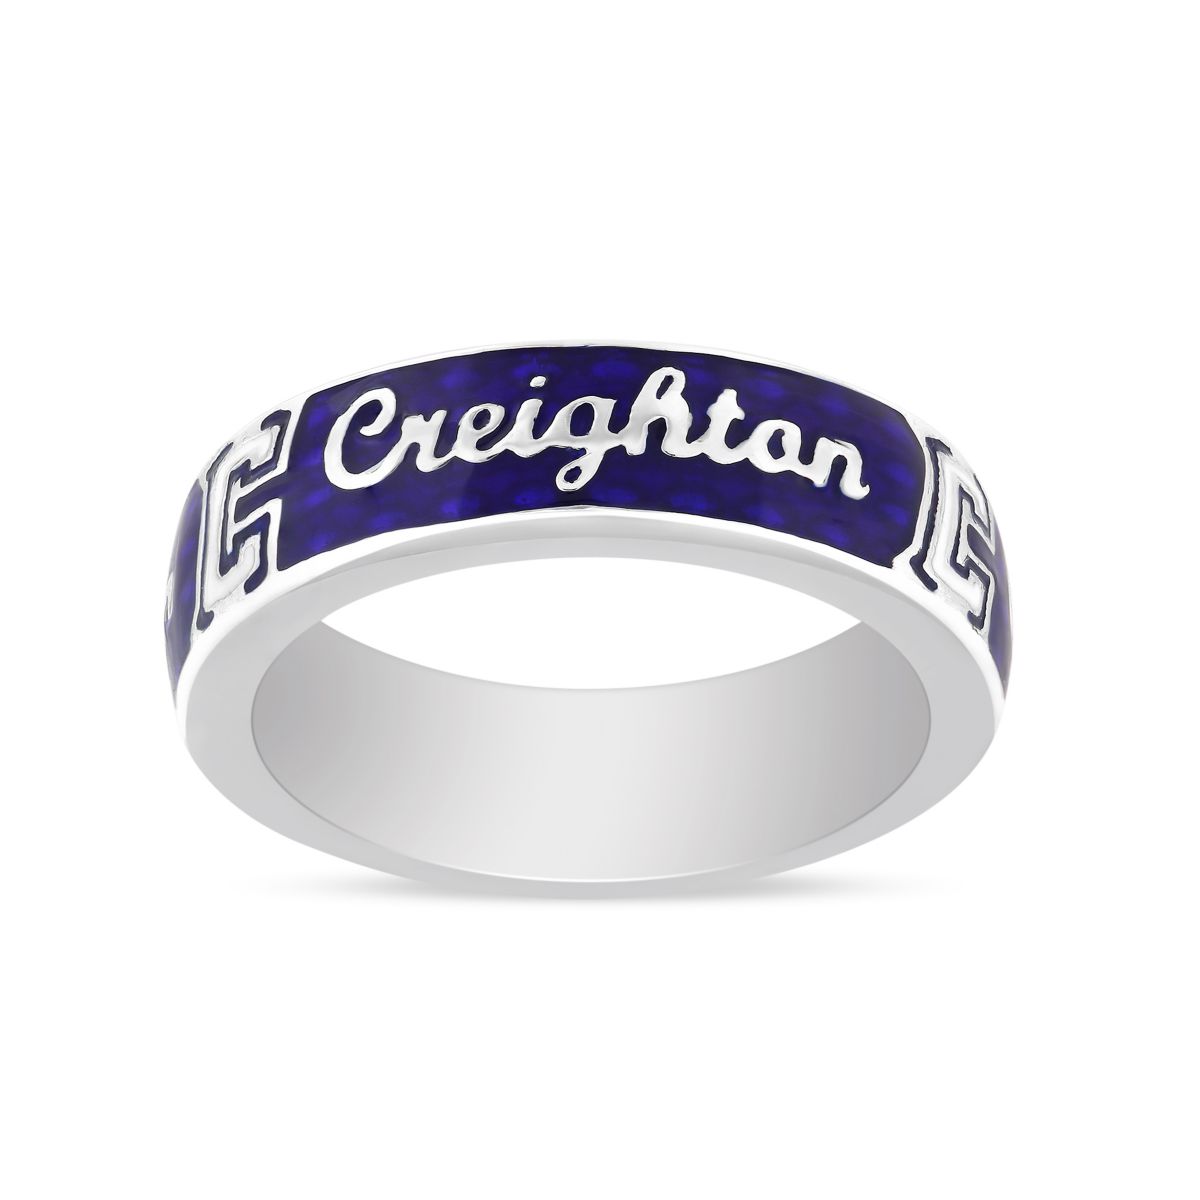 Creighton Bluejays Sterling Silver & Blue Enamel Ring, Size 8 | Borsheims